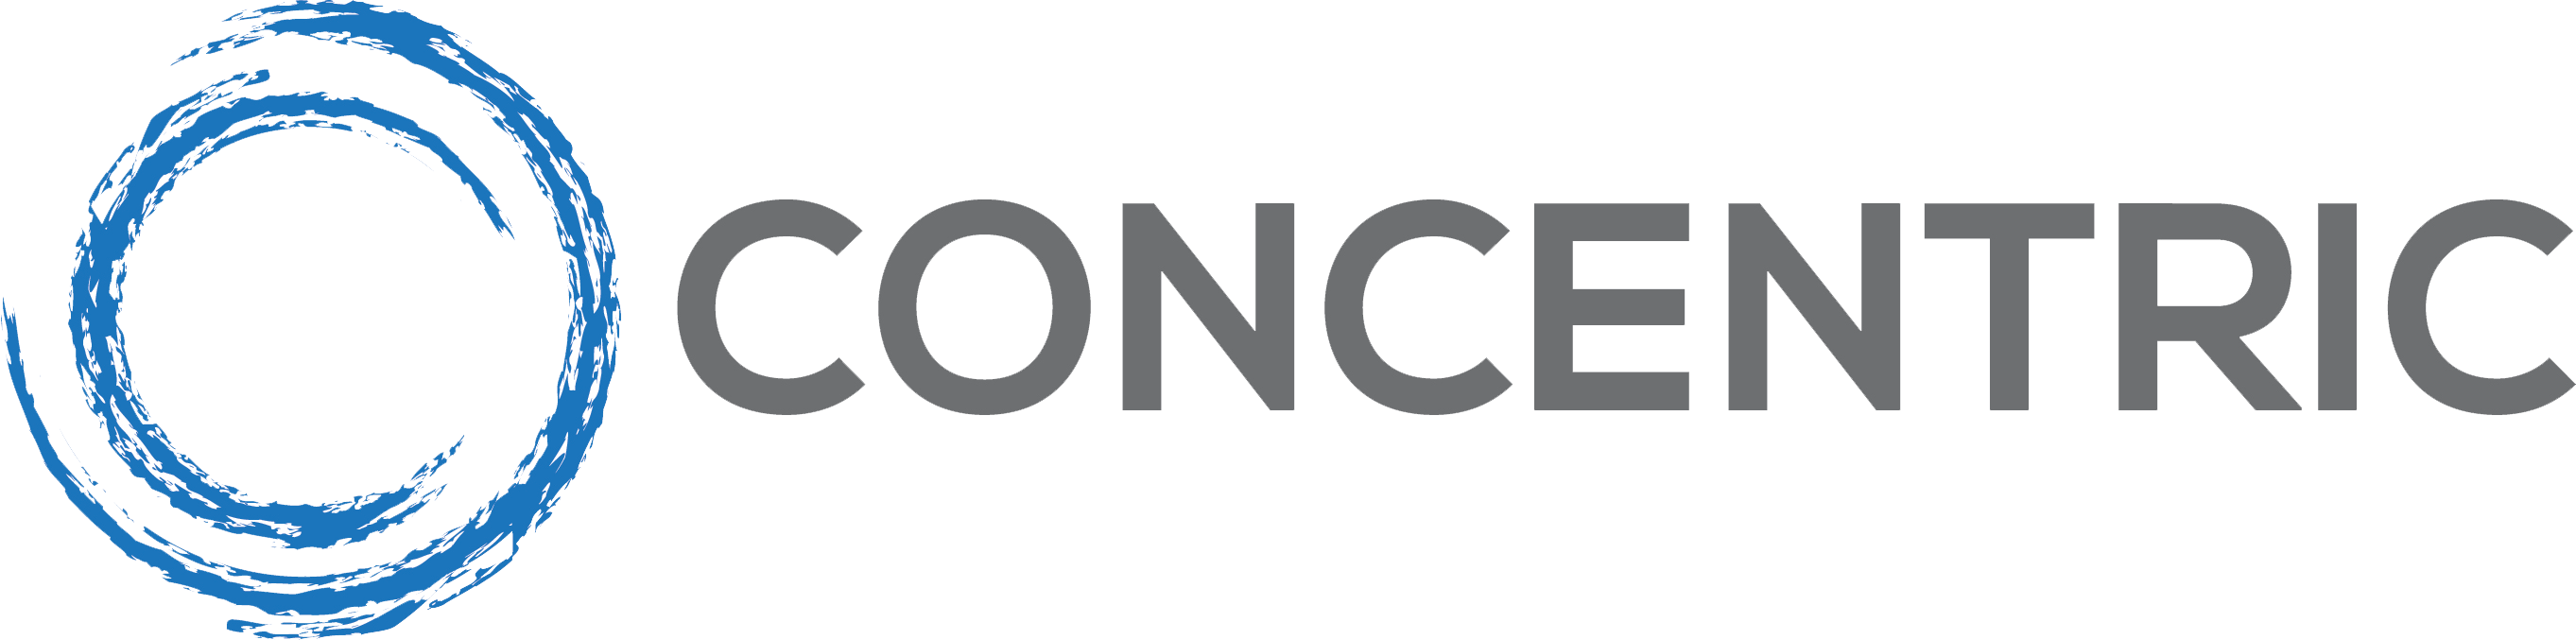 Concentric logo